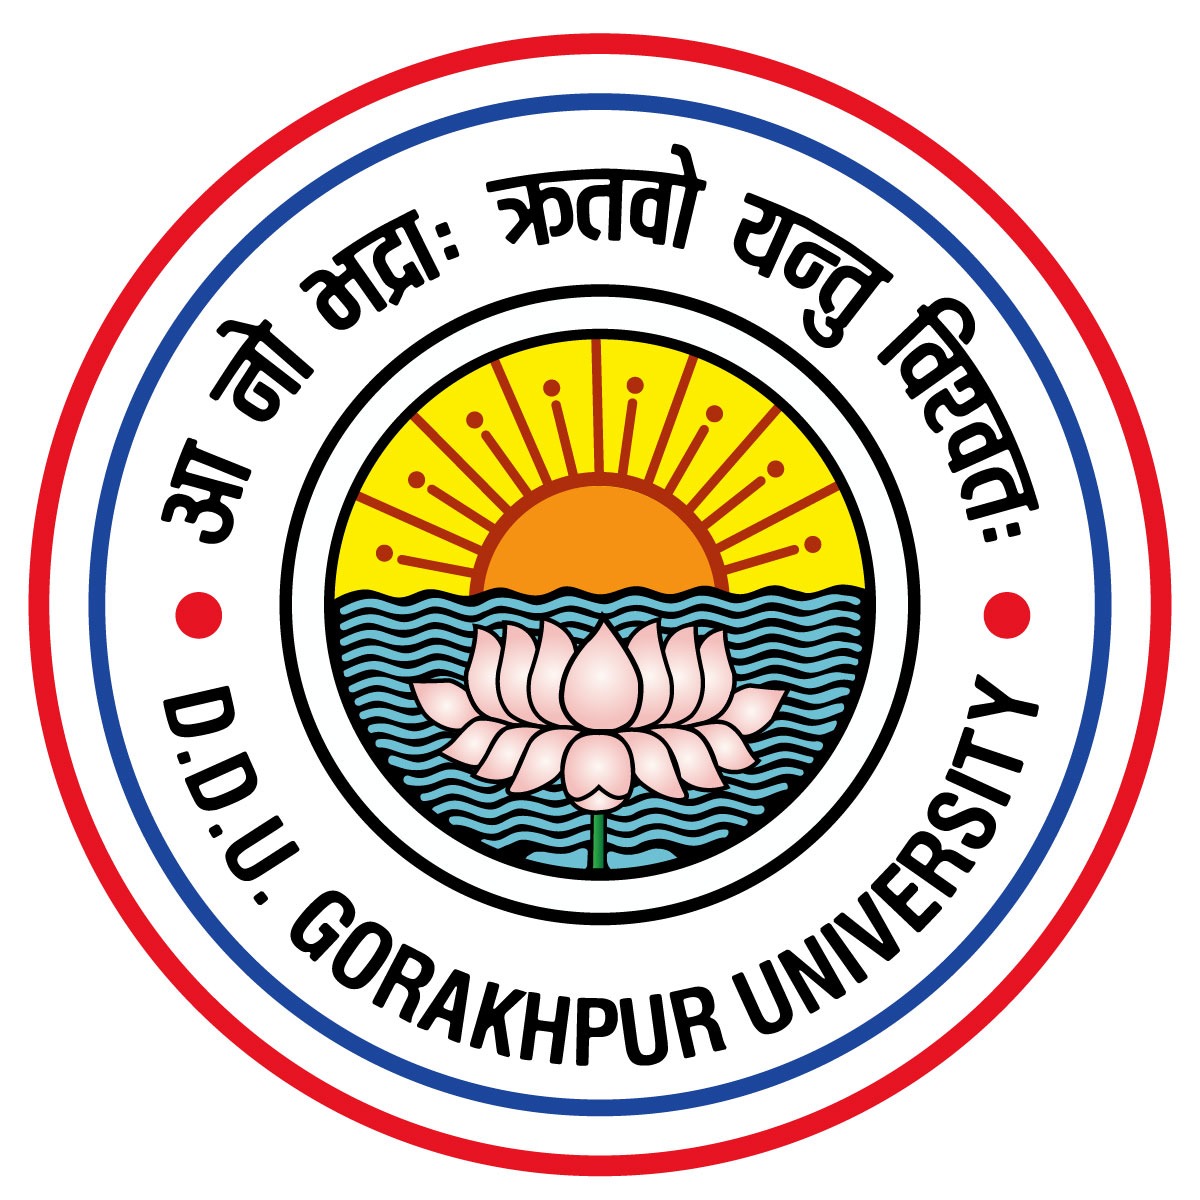  Deen Dayal Upadhyaya Gorakhpur University